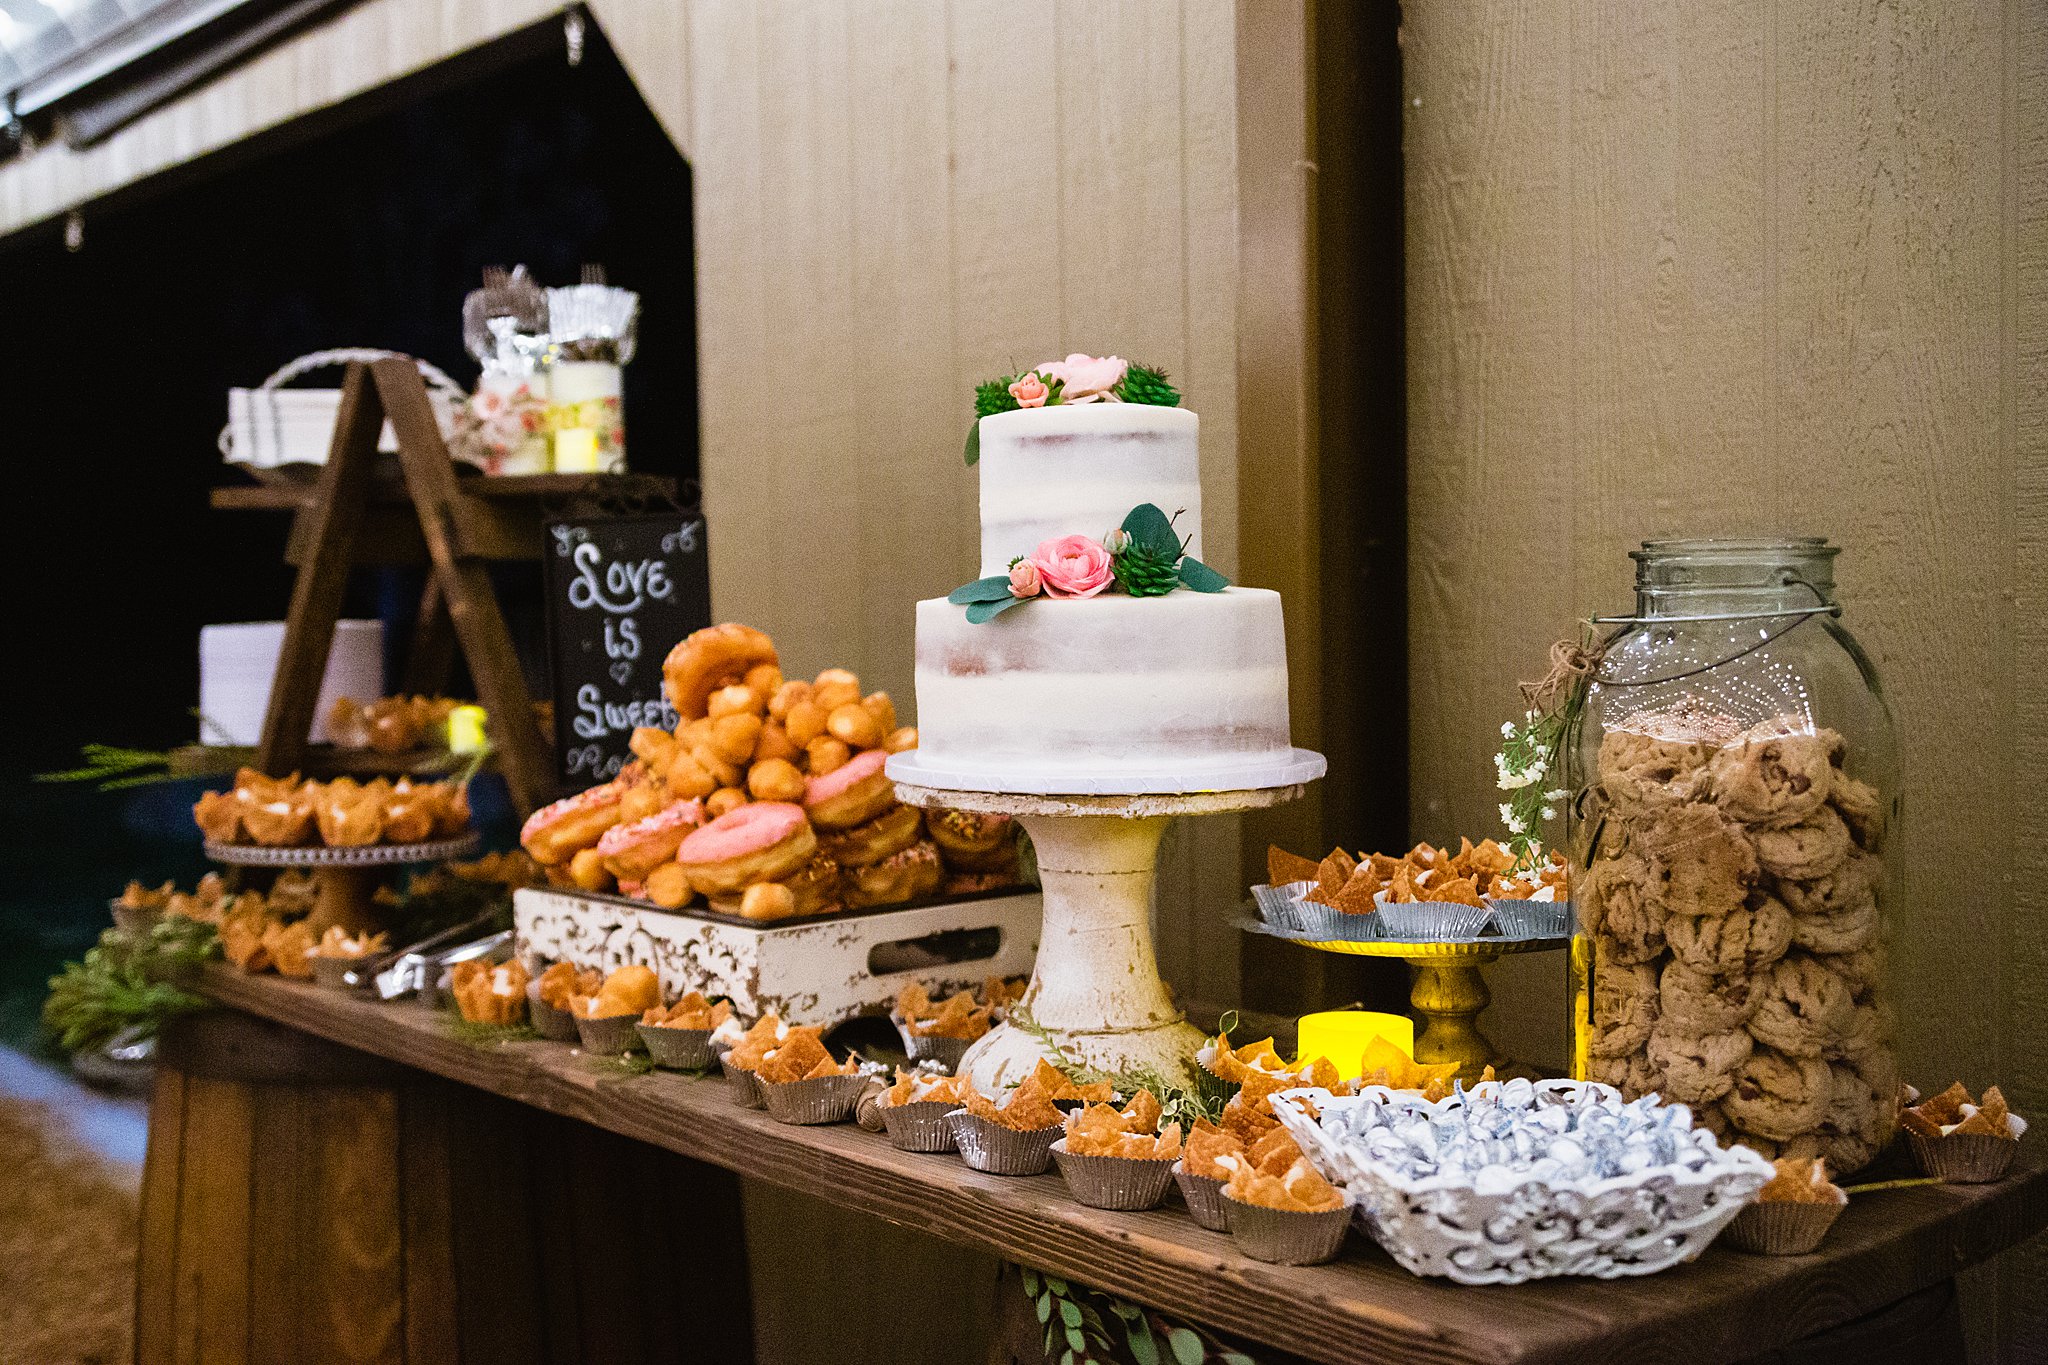 Cake and dessert table at Van Dickson Ranch wedding reception by Arizona wedding photographer PMA Photography.